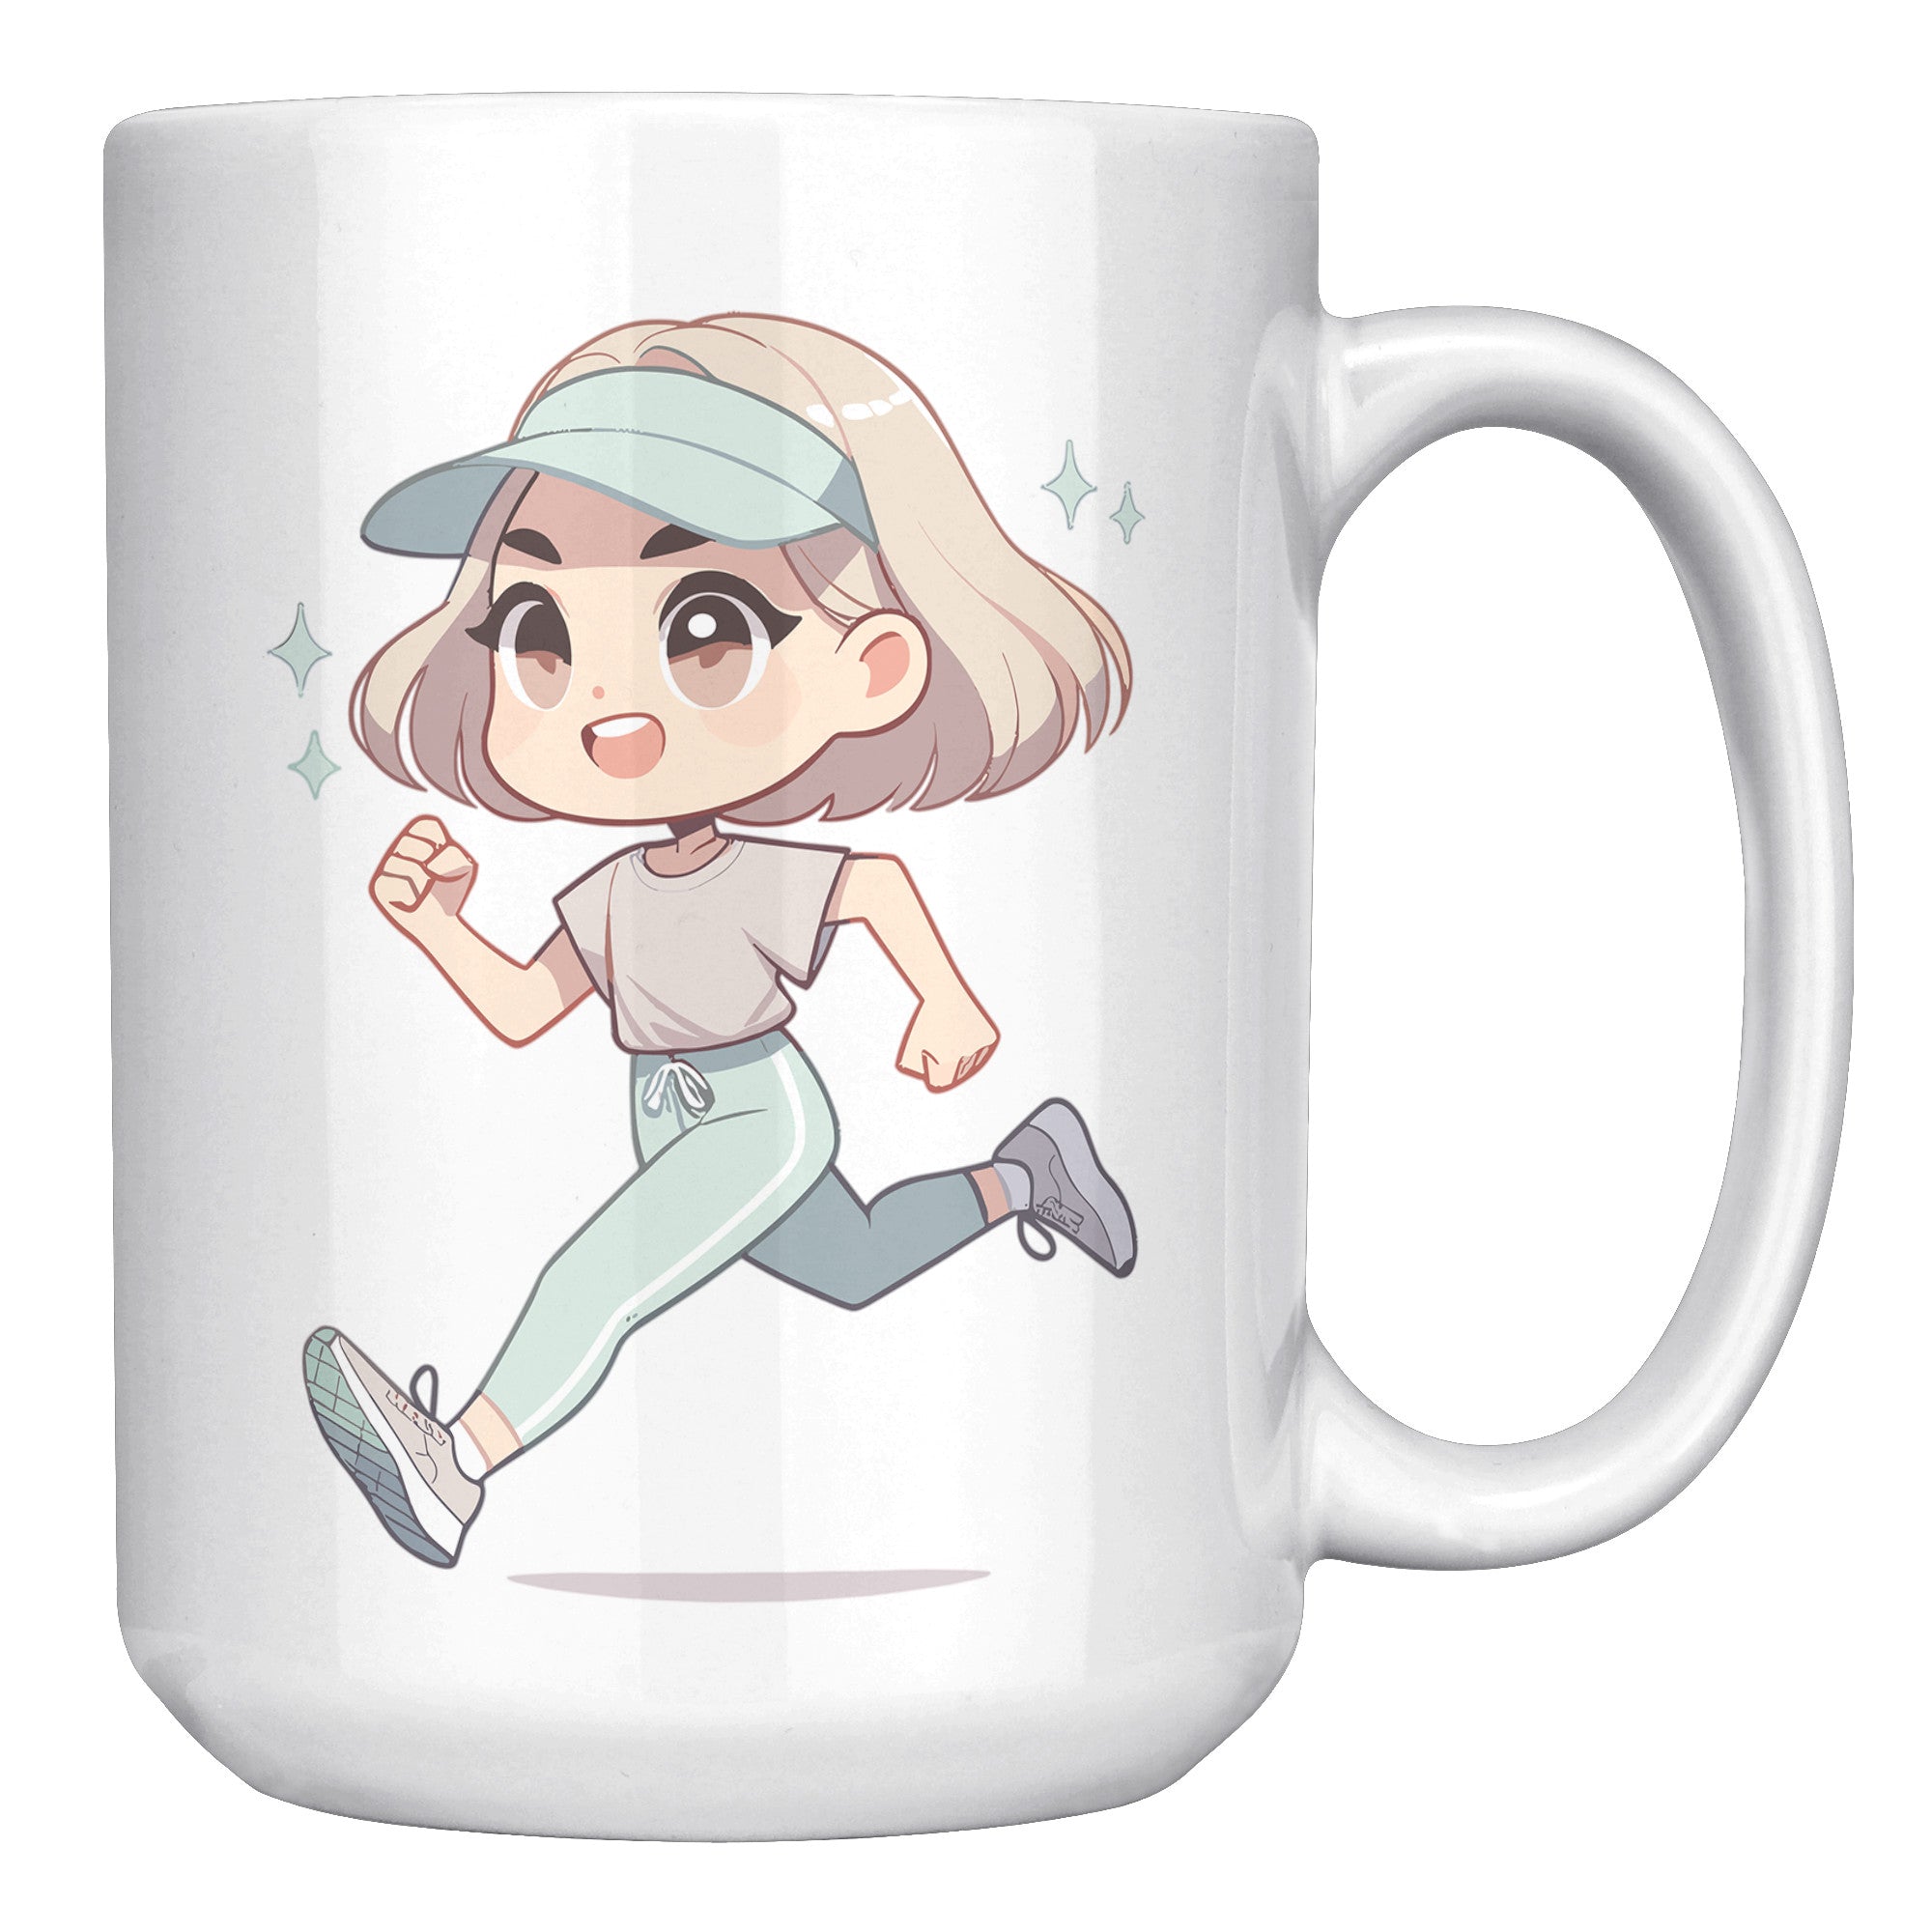 "Female Runner Coffee Mug - Inspirational Running Quotes Cup - Perfect Gift for Women Runners - Motivational Marathoner's Morning Brew" - Q1